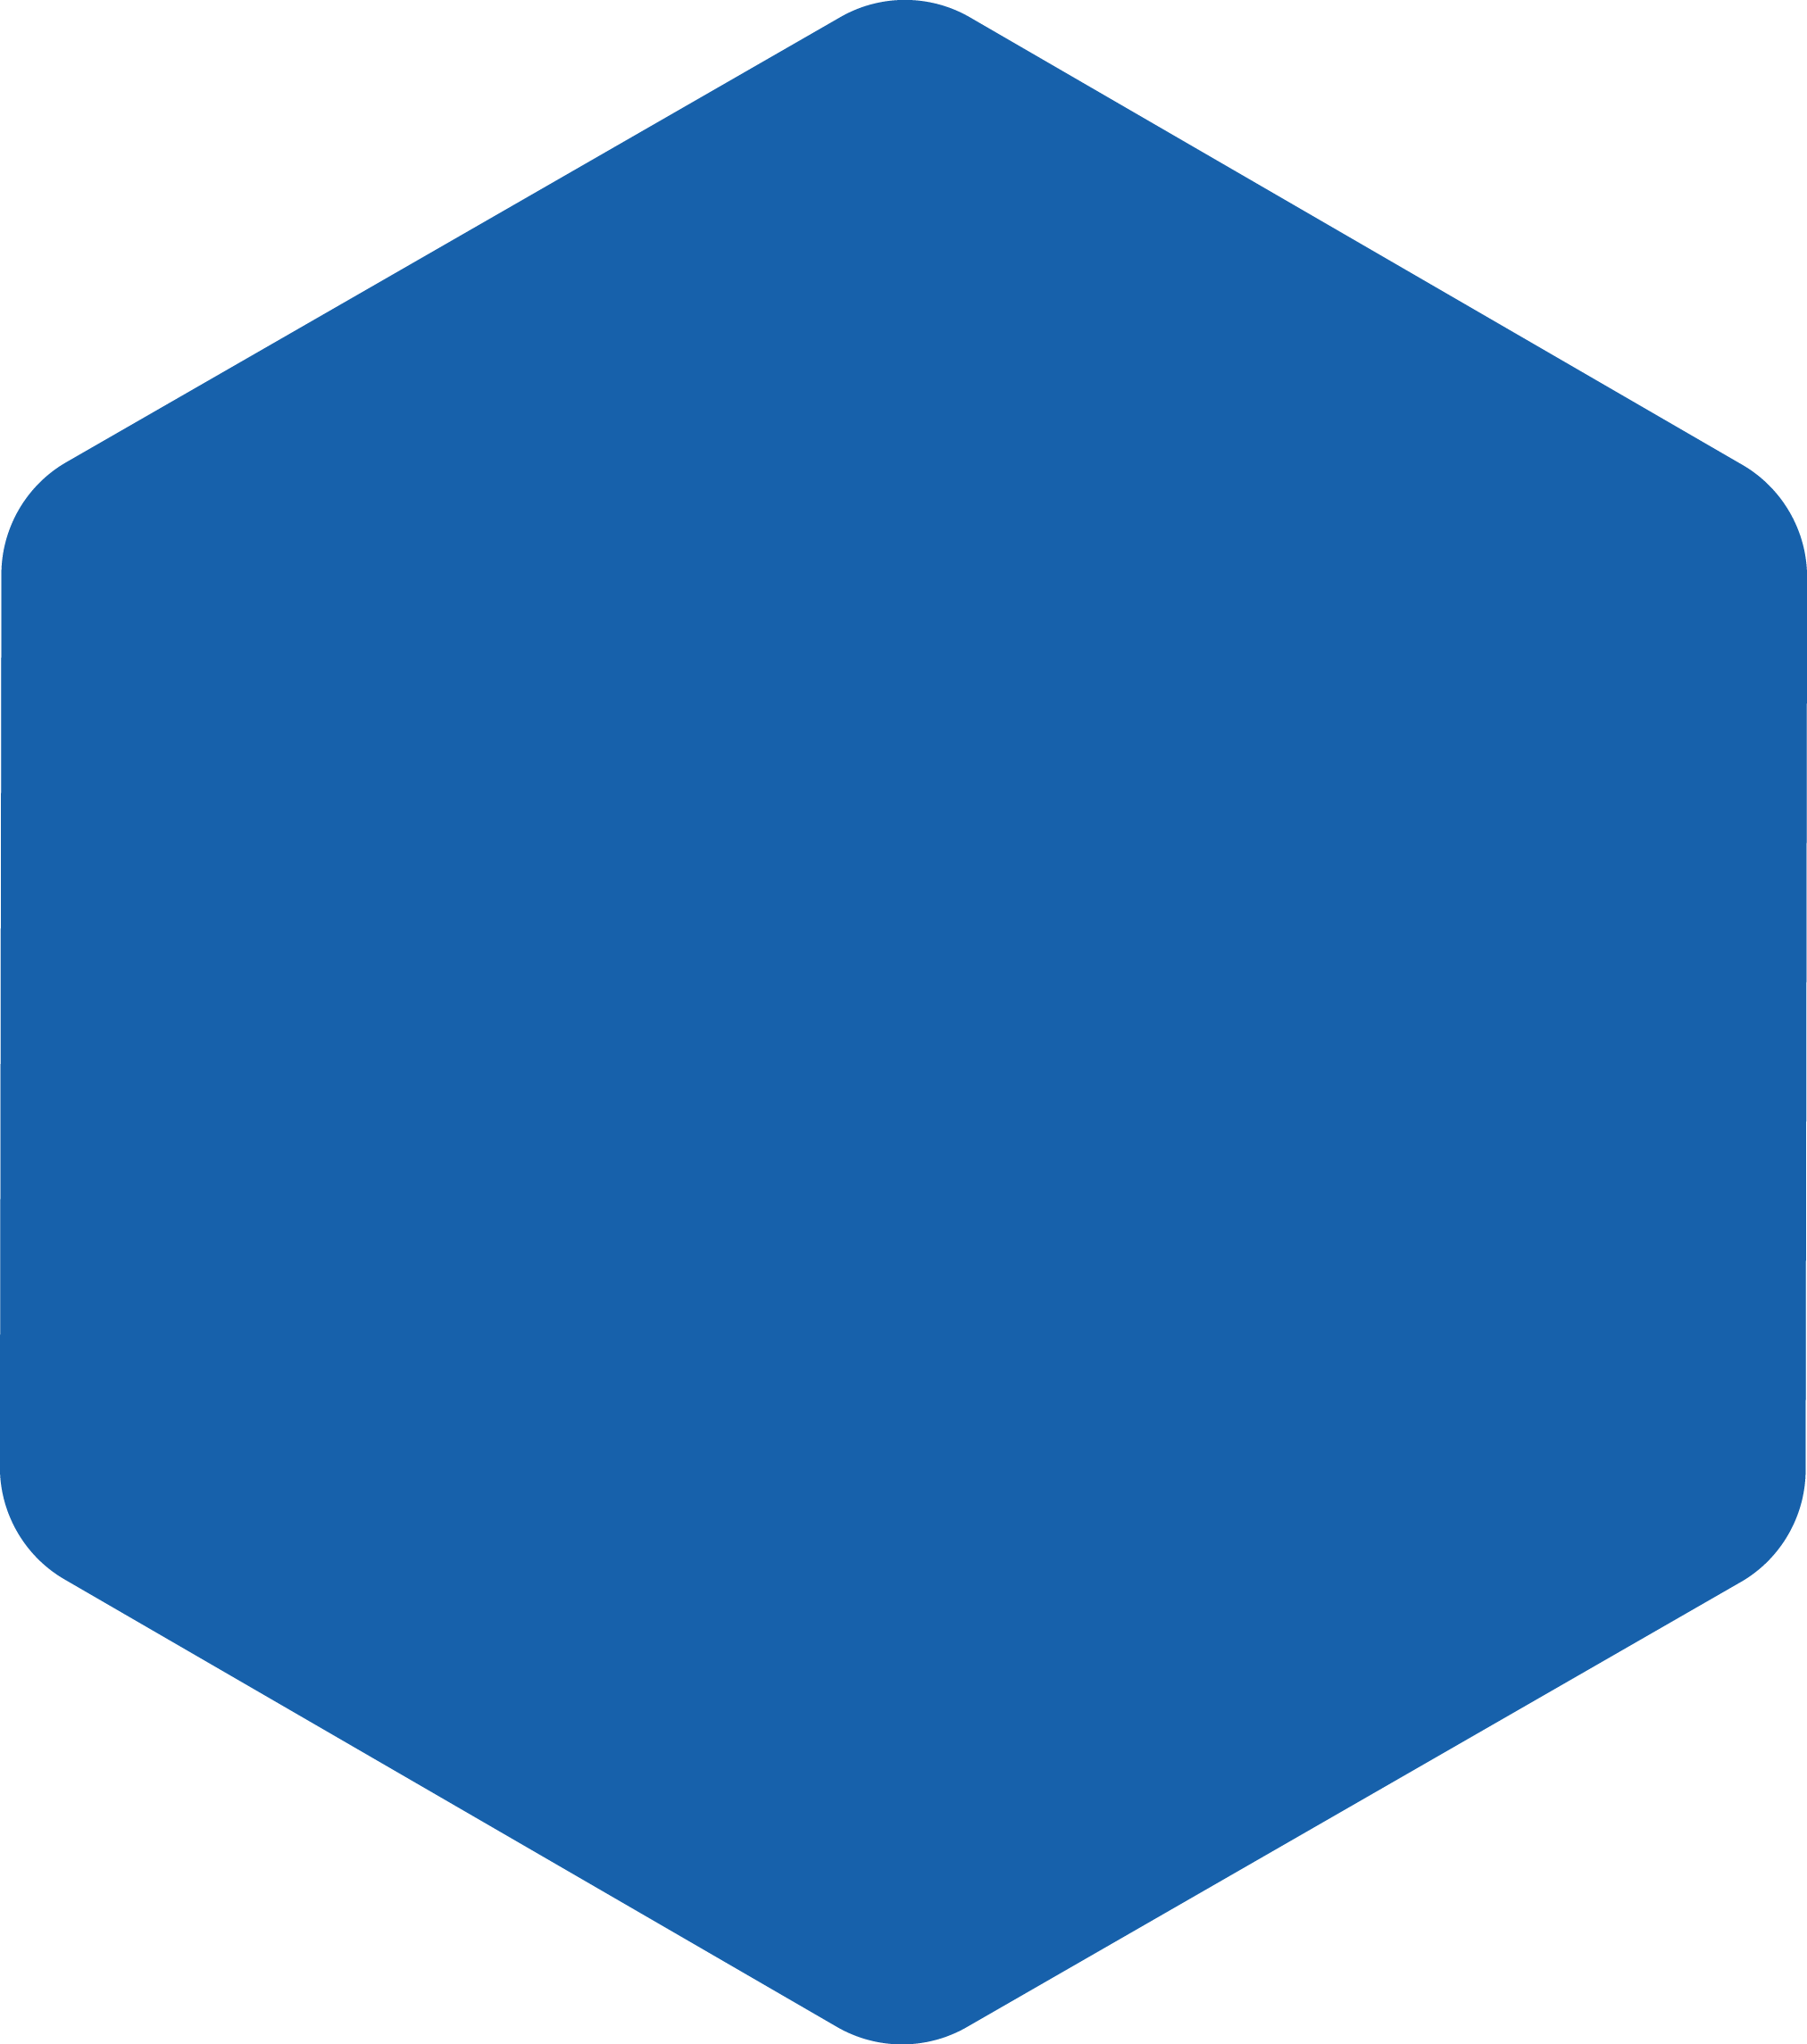 Hexagon clipart blue, Hexagon blue Transparent FREE for